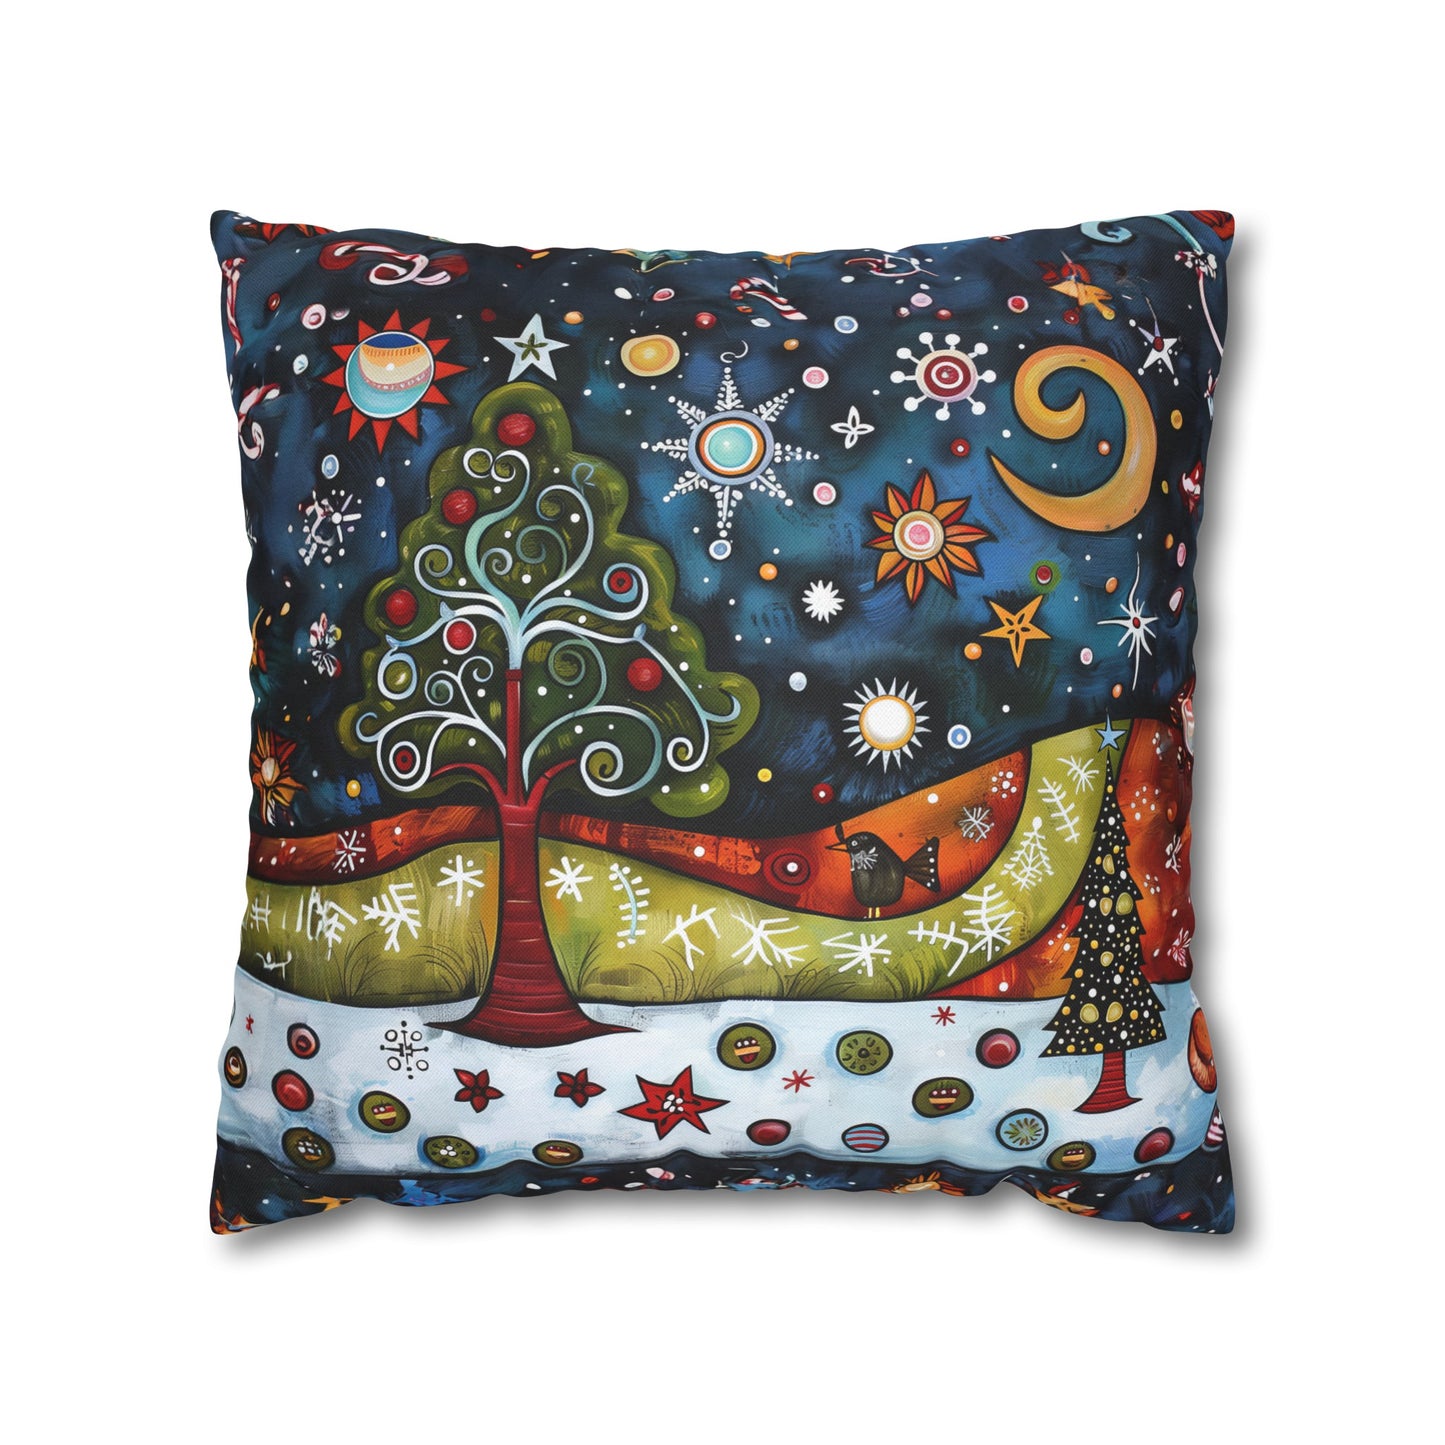 Whimsical Winter Village: Abstract Folk Art Christmas Scene Spun Polyester Square Pillowcase 4 Sizes